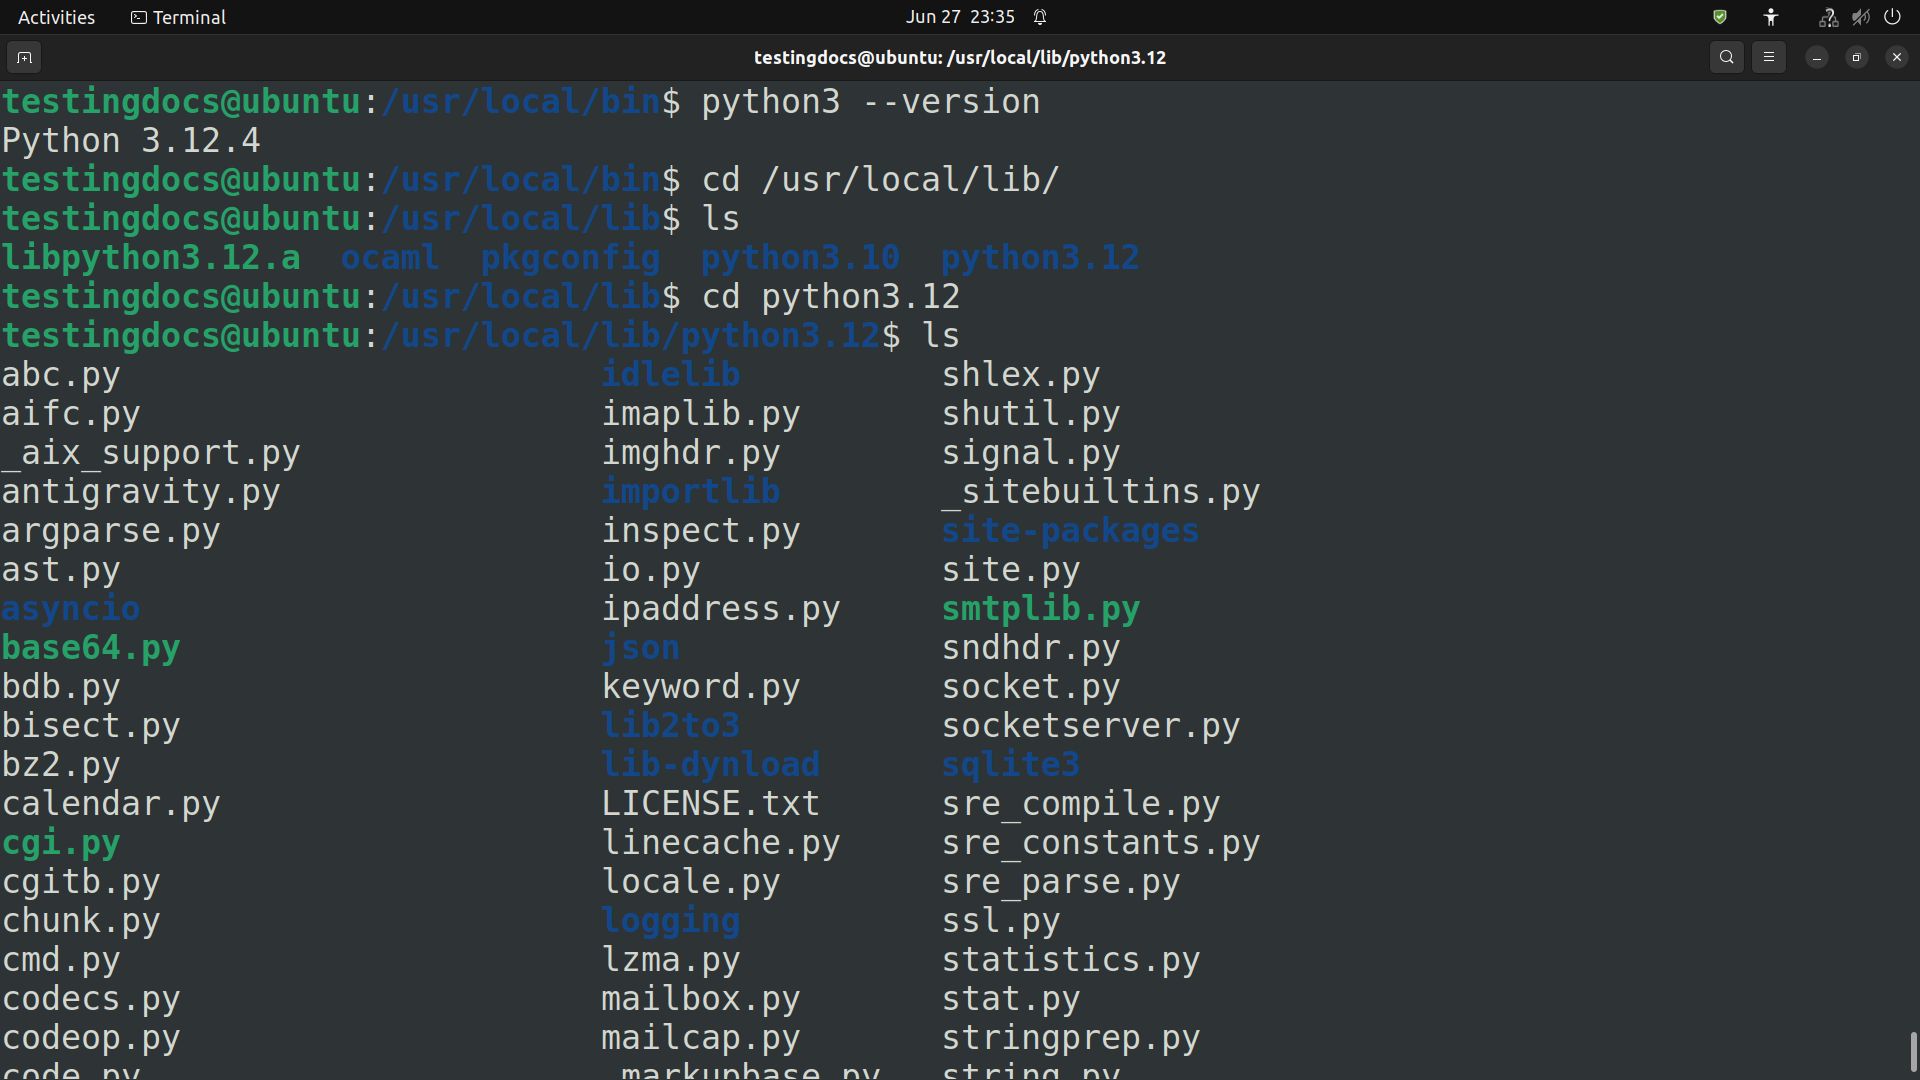 Install Python on Ubuntu Linux